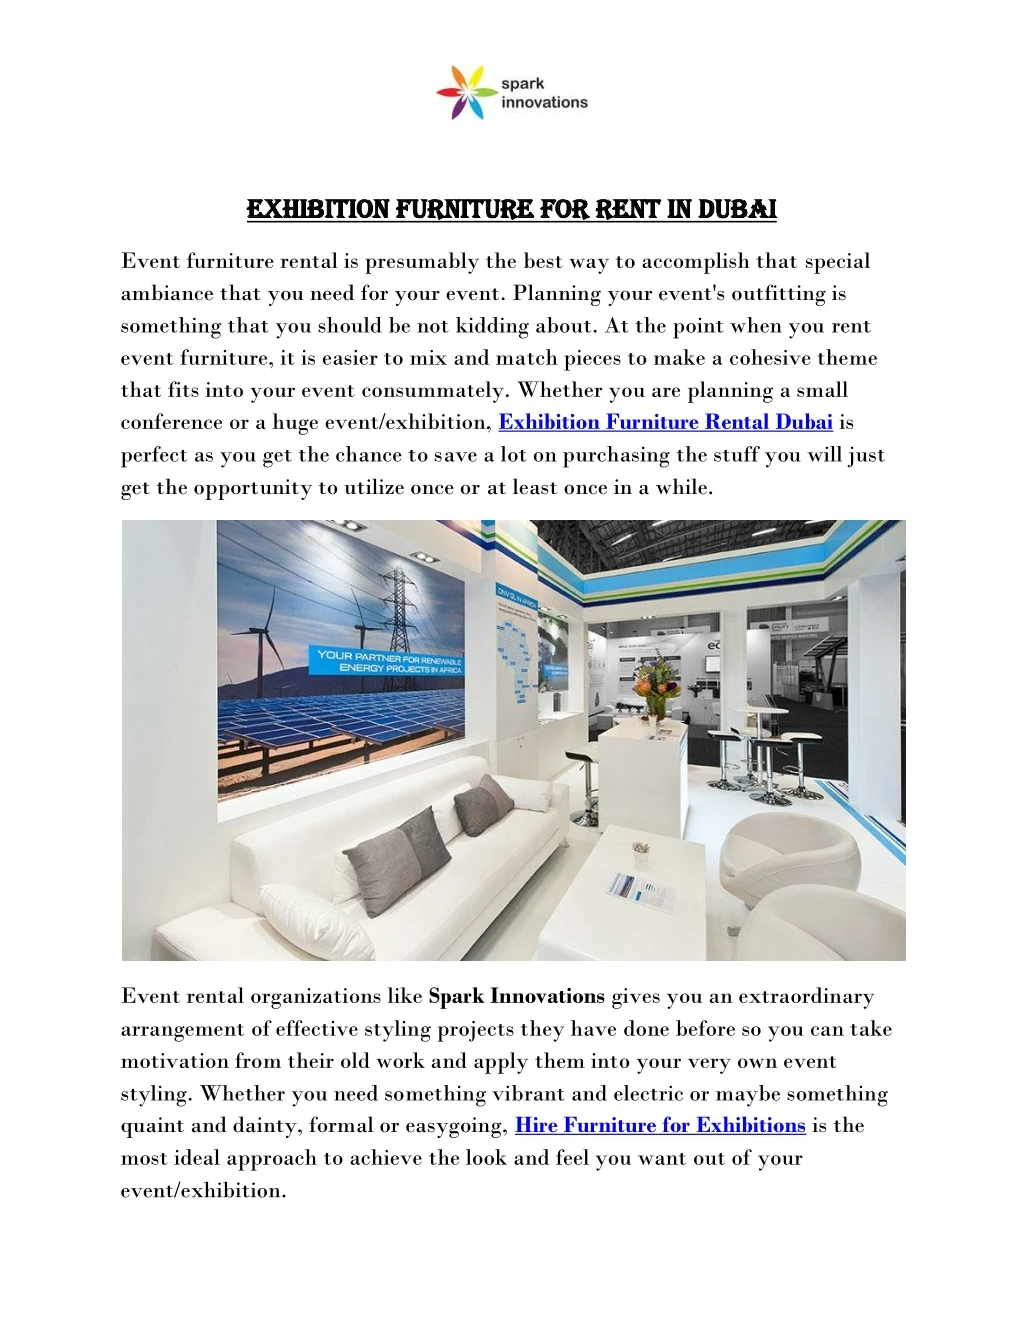 exhibition furniture for rent in dubai exhibition